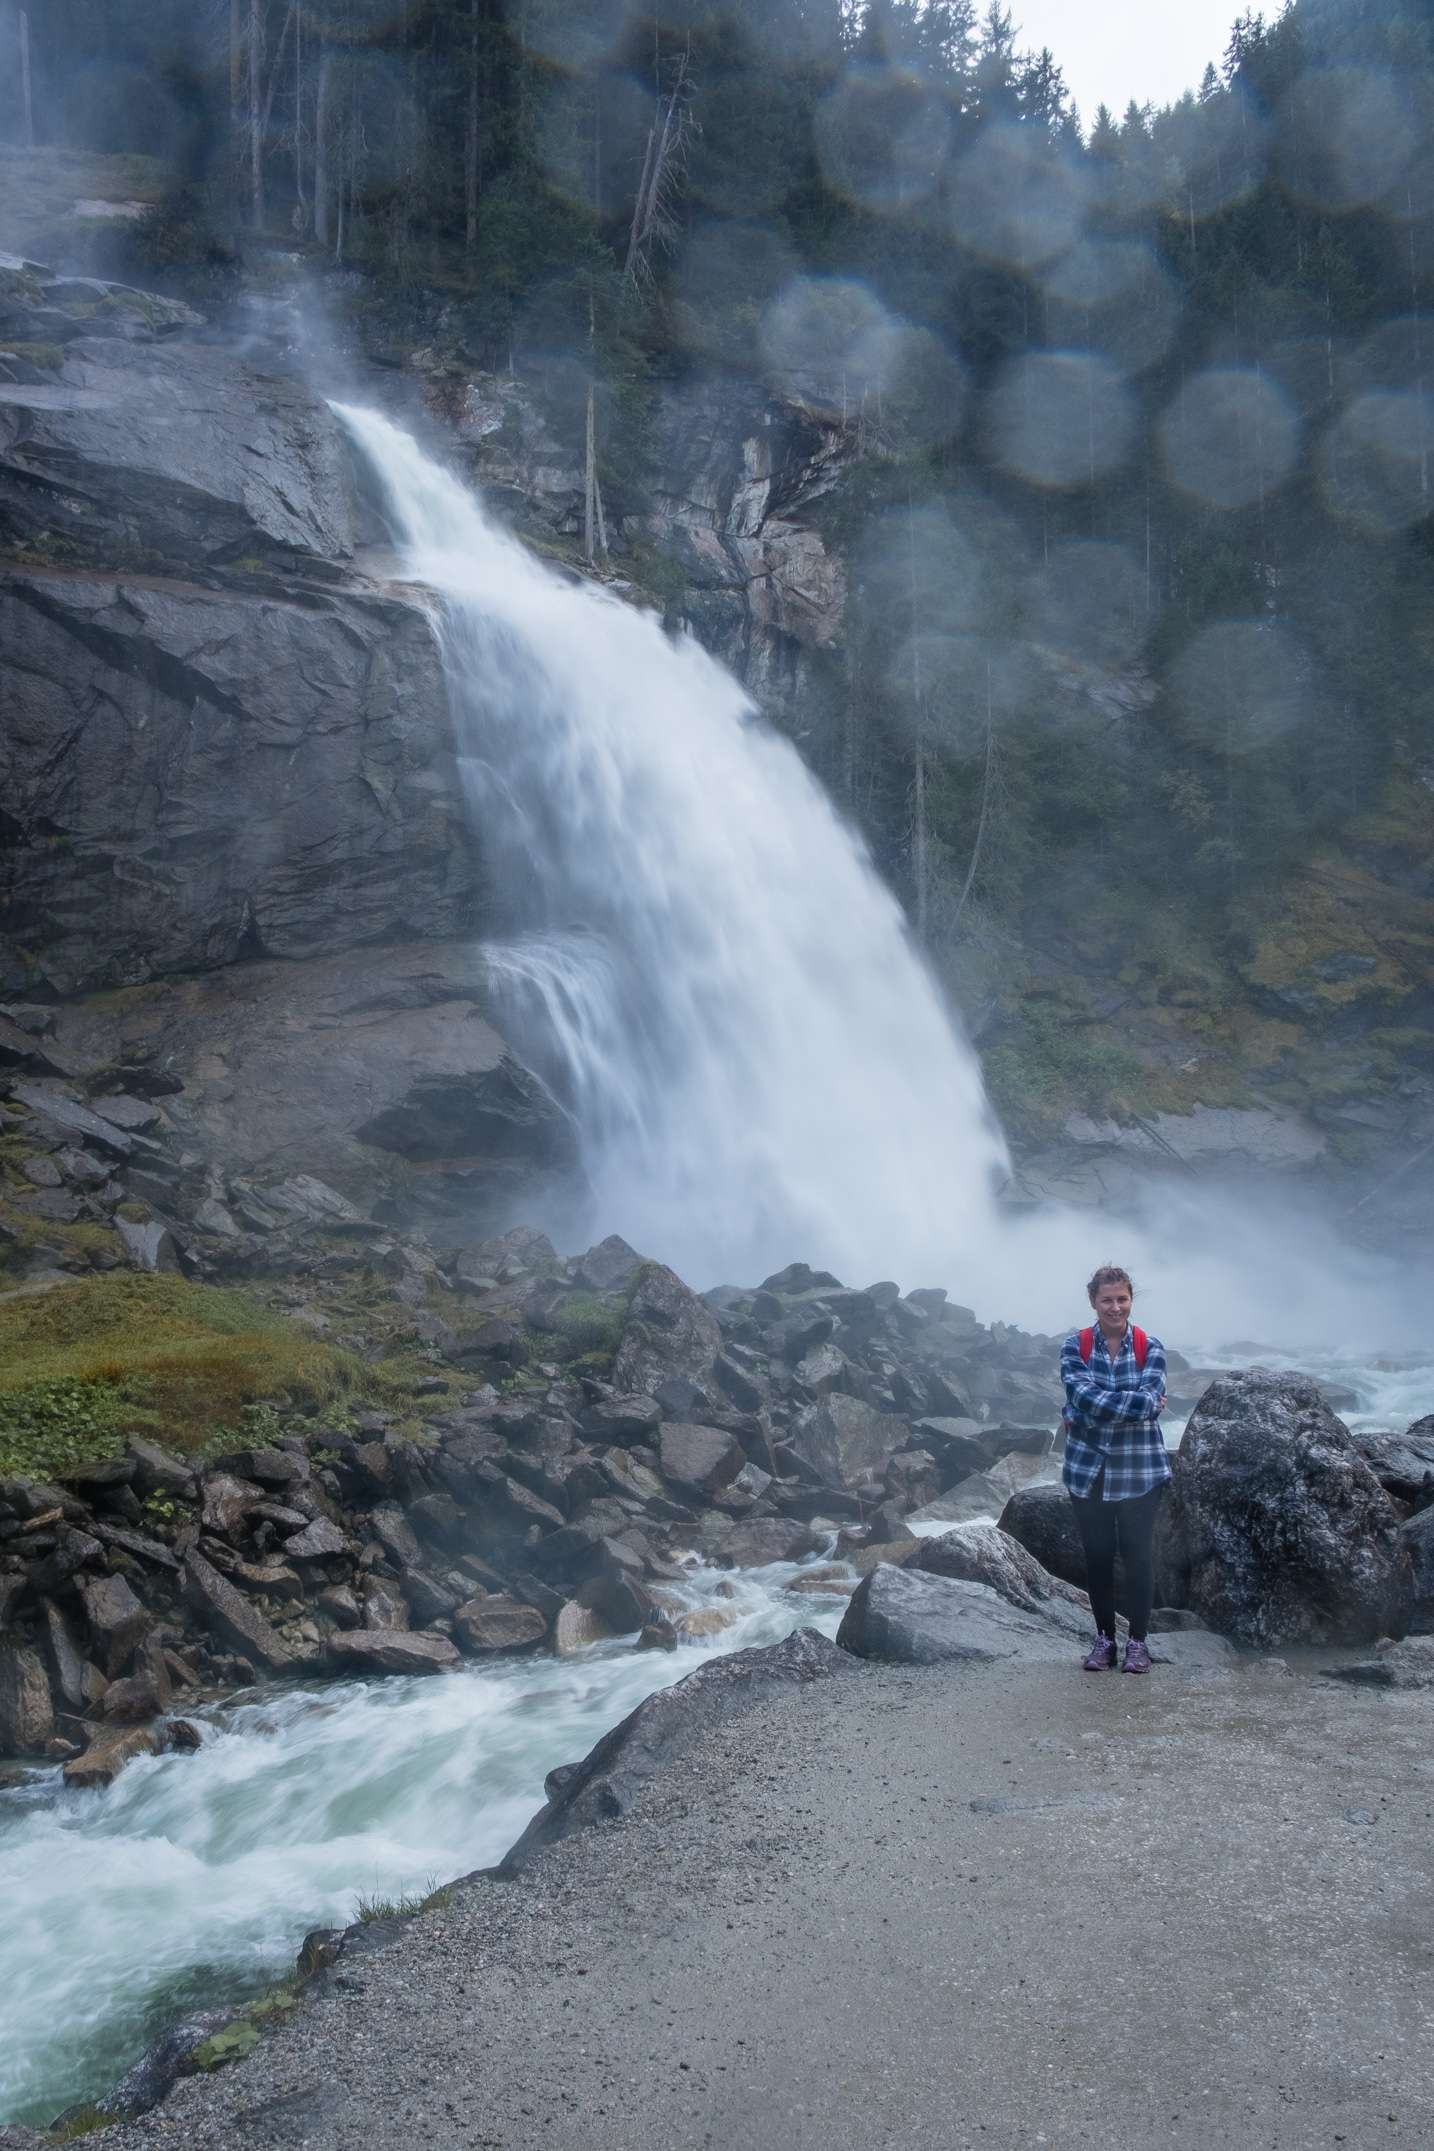 Caroline standing in front of Krimml waterfall getting very wet